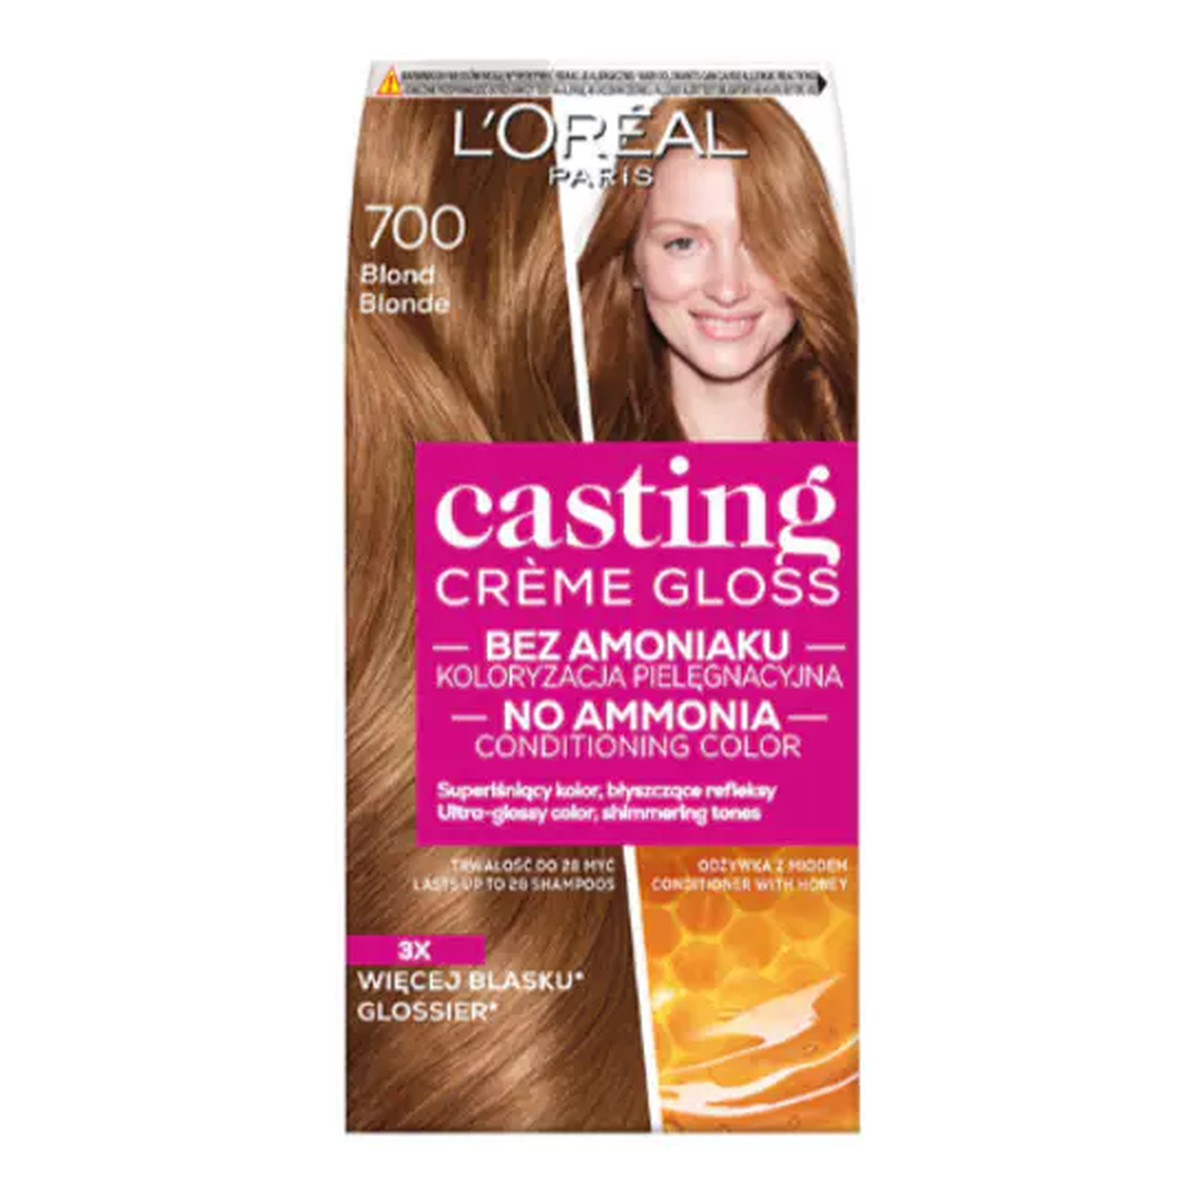 loreal casting creme gloss farba czy szampon